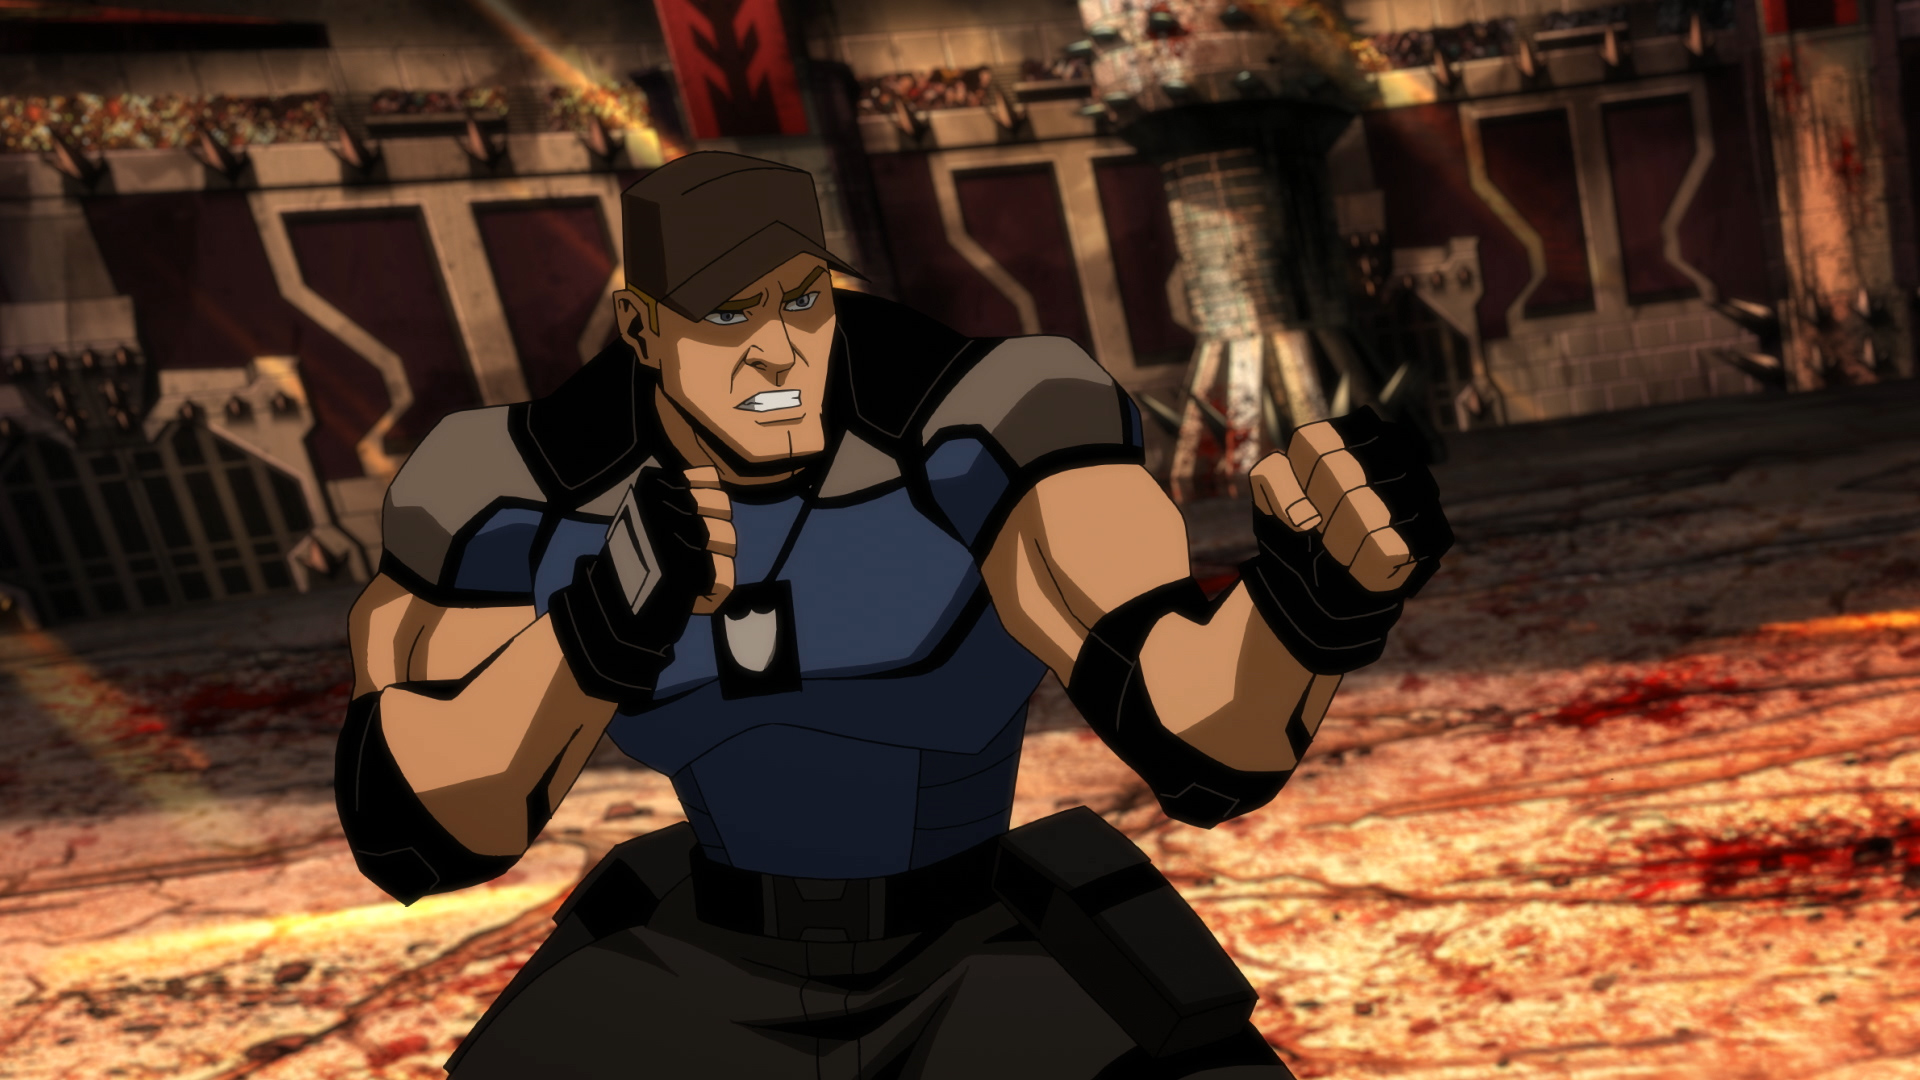 Mortal Kombat Legends: Battle of the Realms (Western Animation